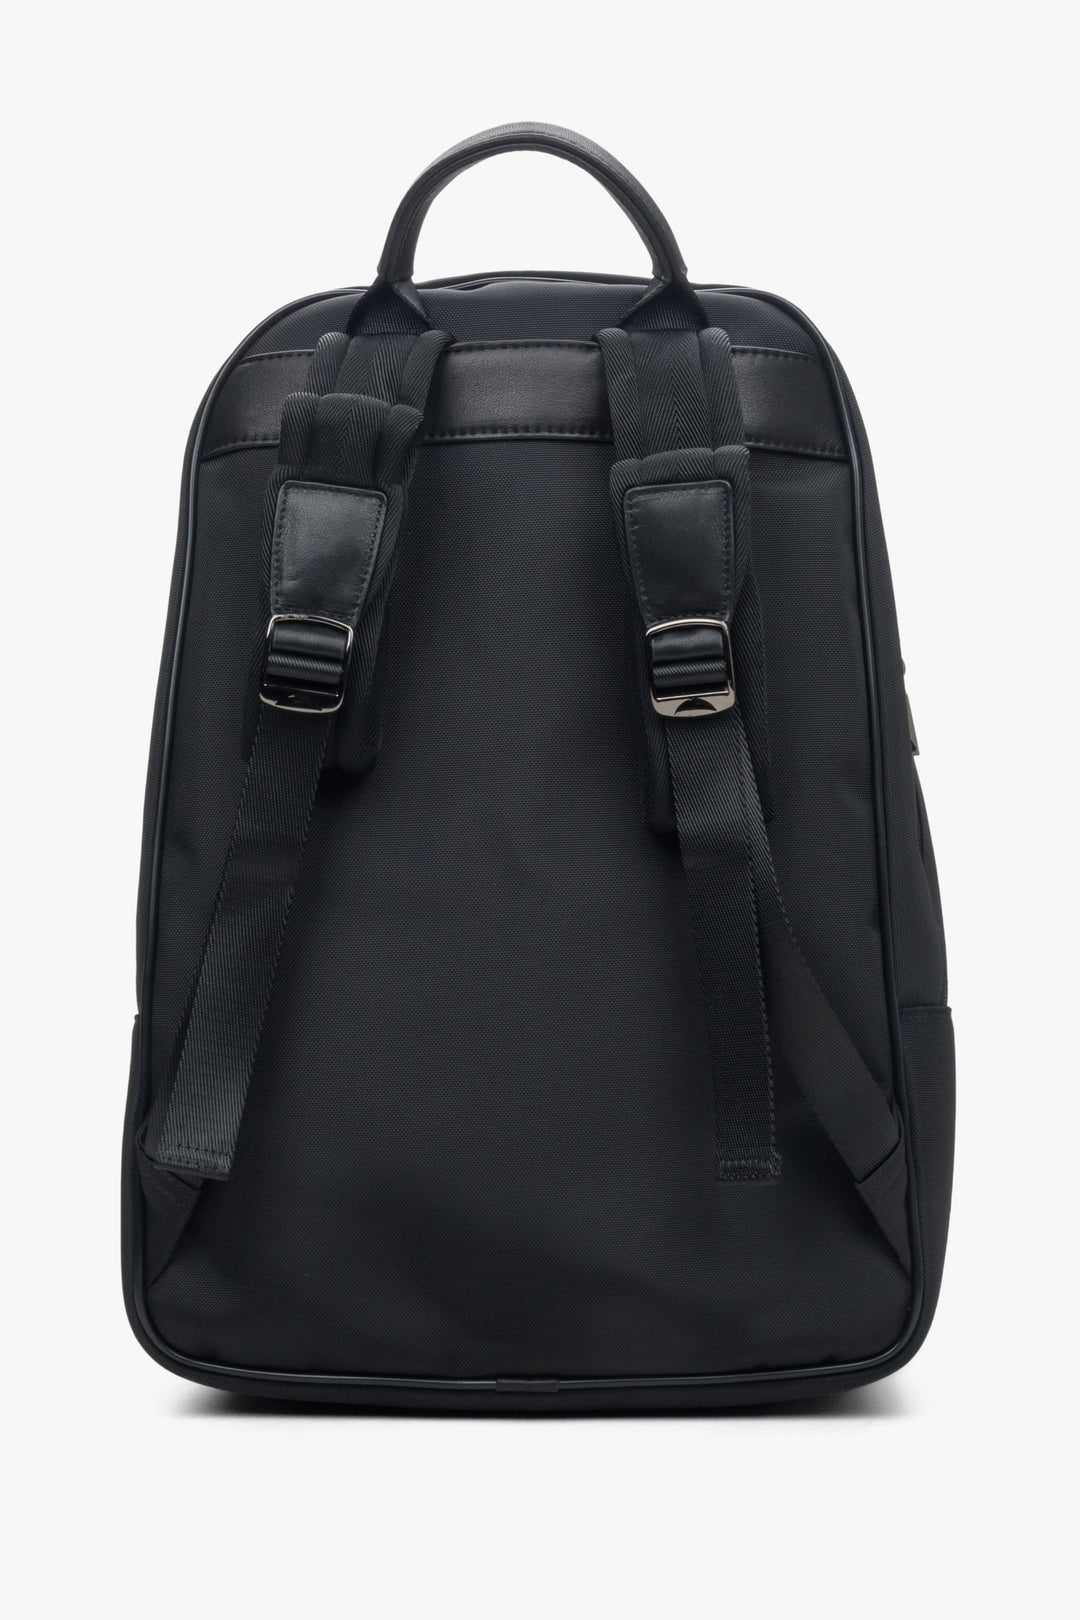 Large, spacious men's  black backpack with adjustable shoulder straps by Estro - reverse side.